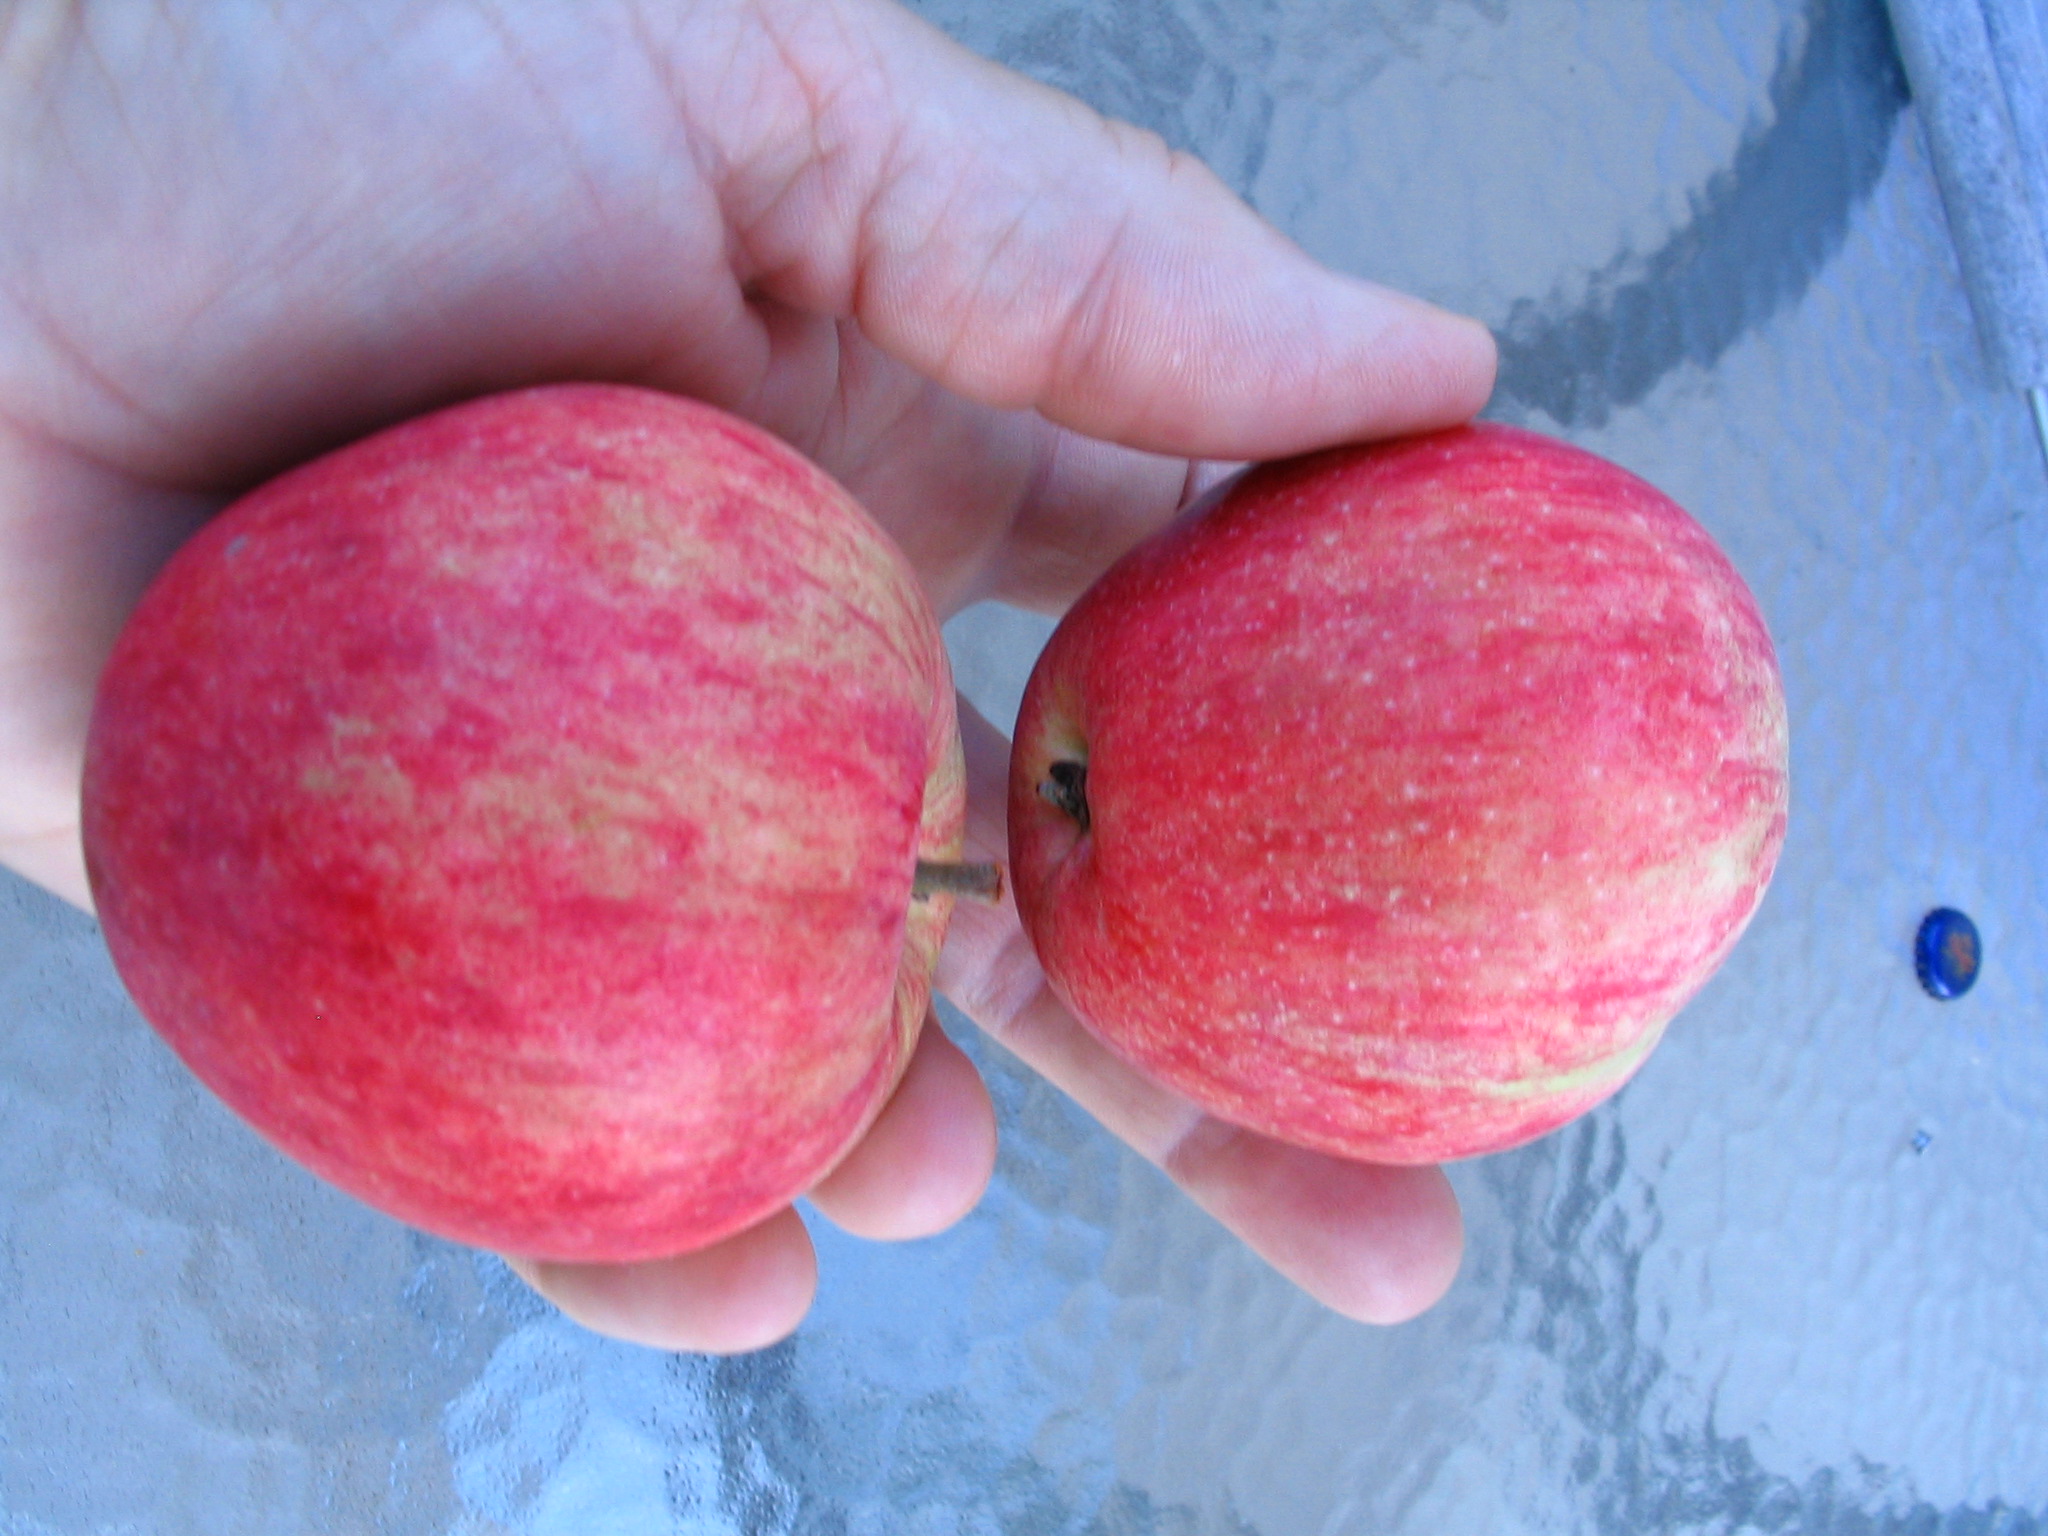 Apple tree photos…Part II Mandy's Greenhouse